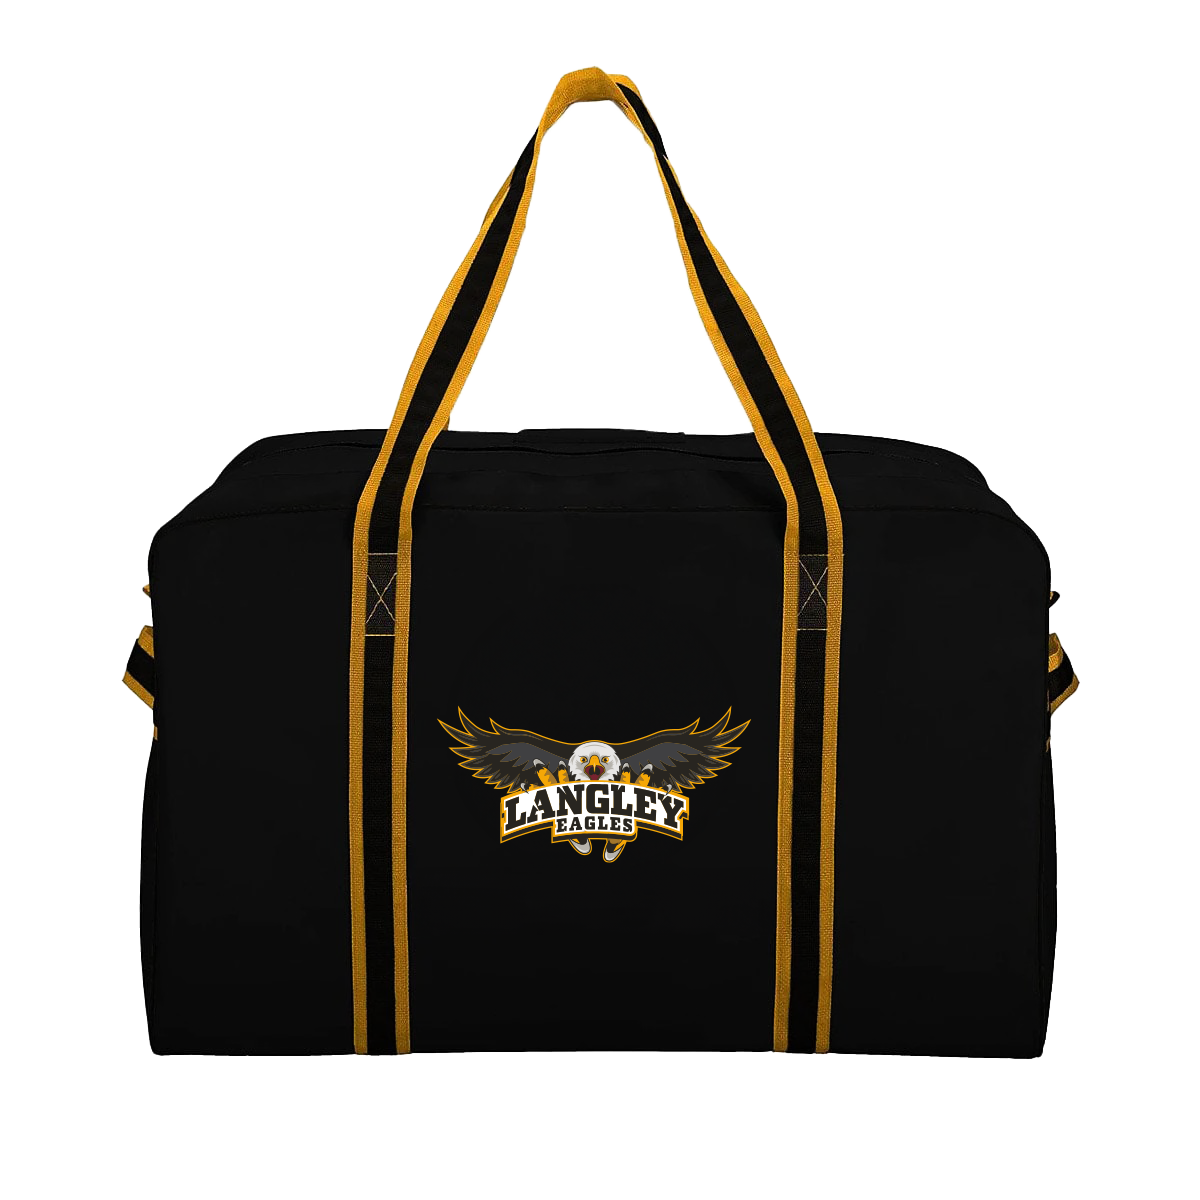 Langley Eagles -- Warrior Intermediate Hockey Bag